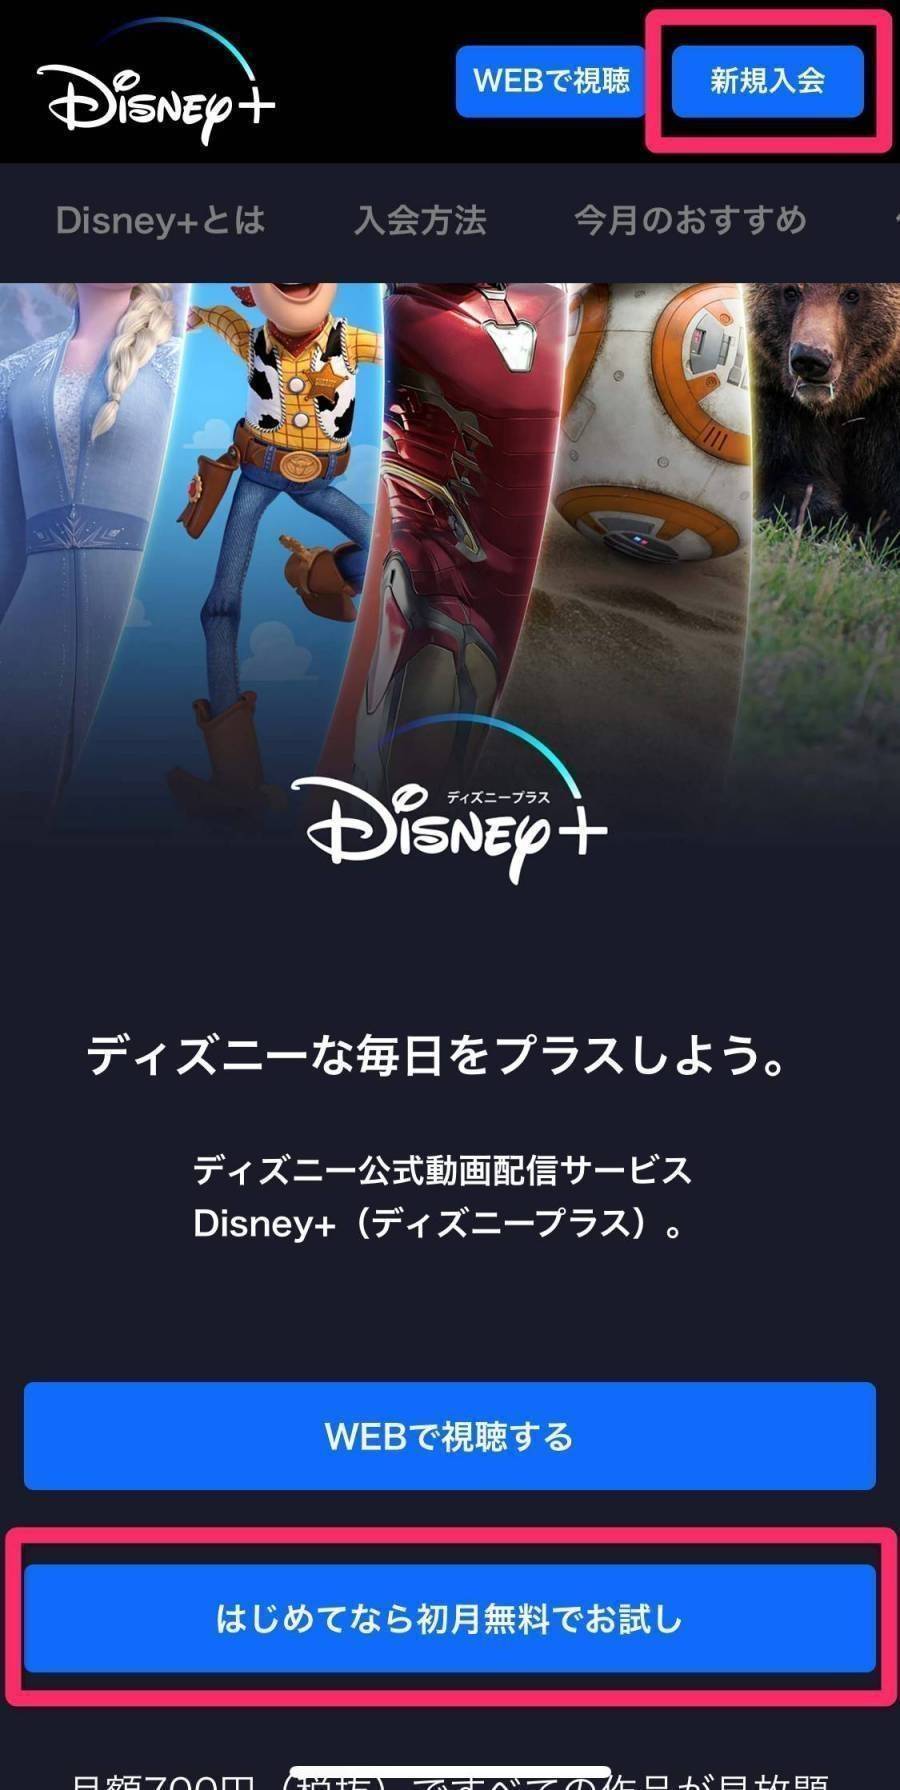 Disney ディズニープラス に無料で登録 1年間実質タダで利用できる方法も紹介 Appliv Topics